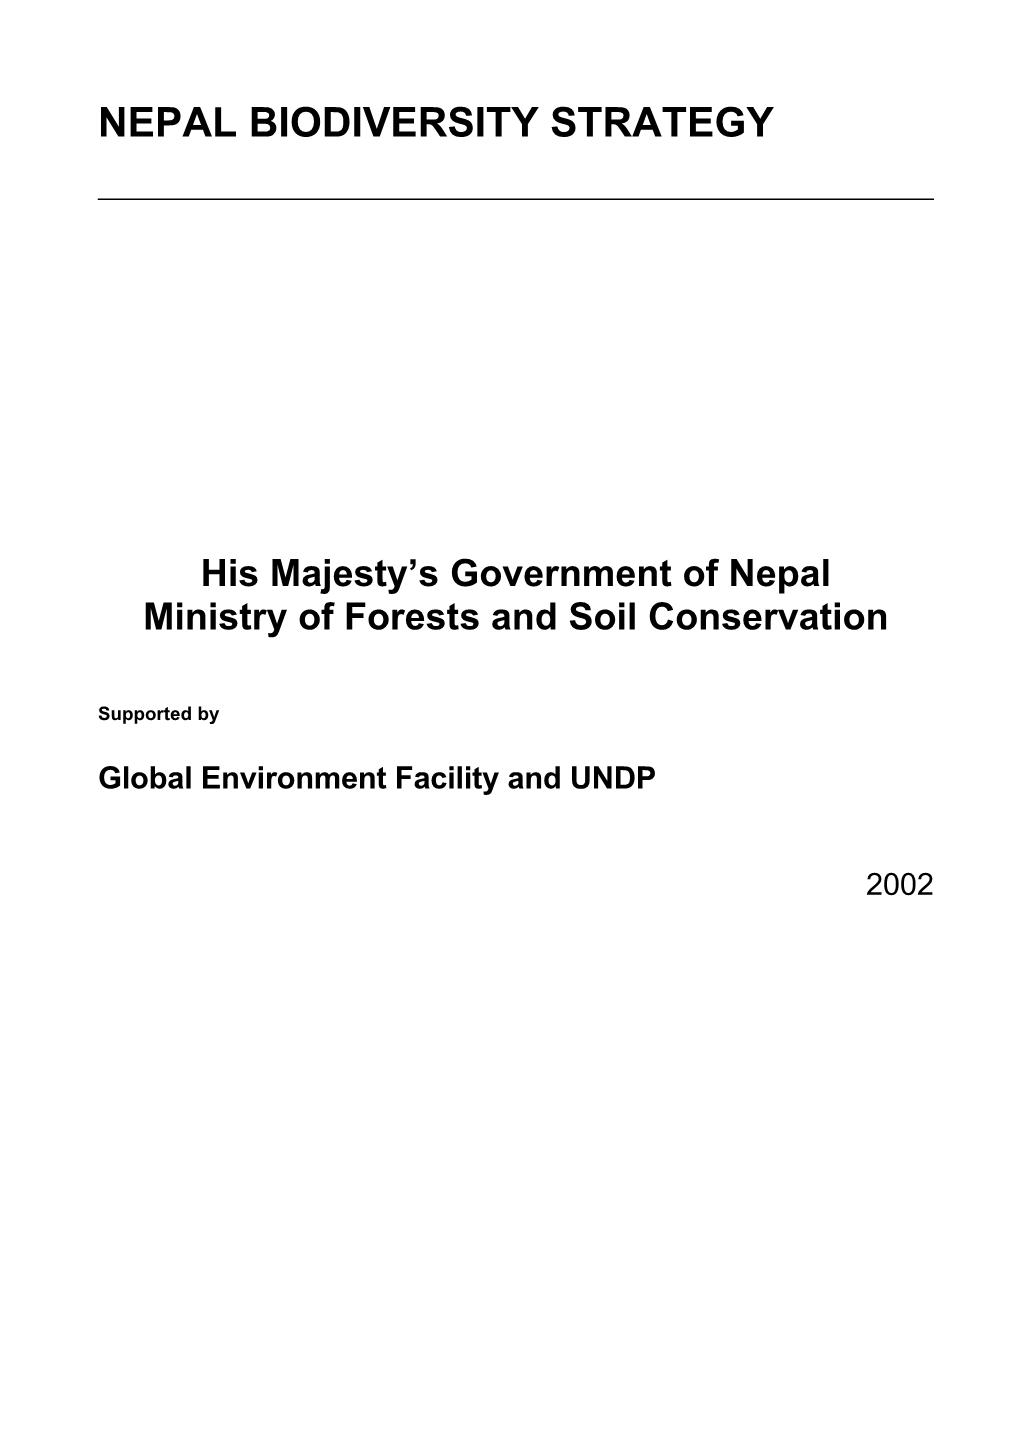 CBD Strategy and Action Plan - Nepal (English Version)